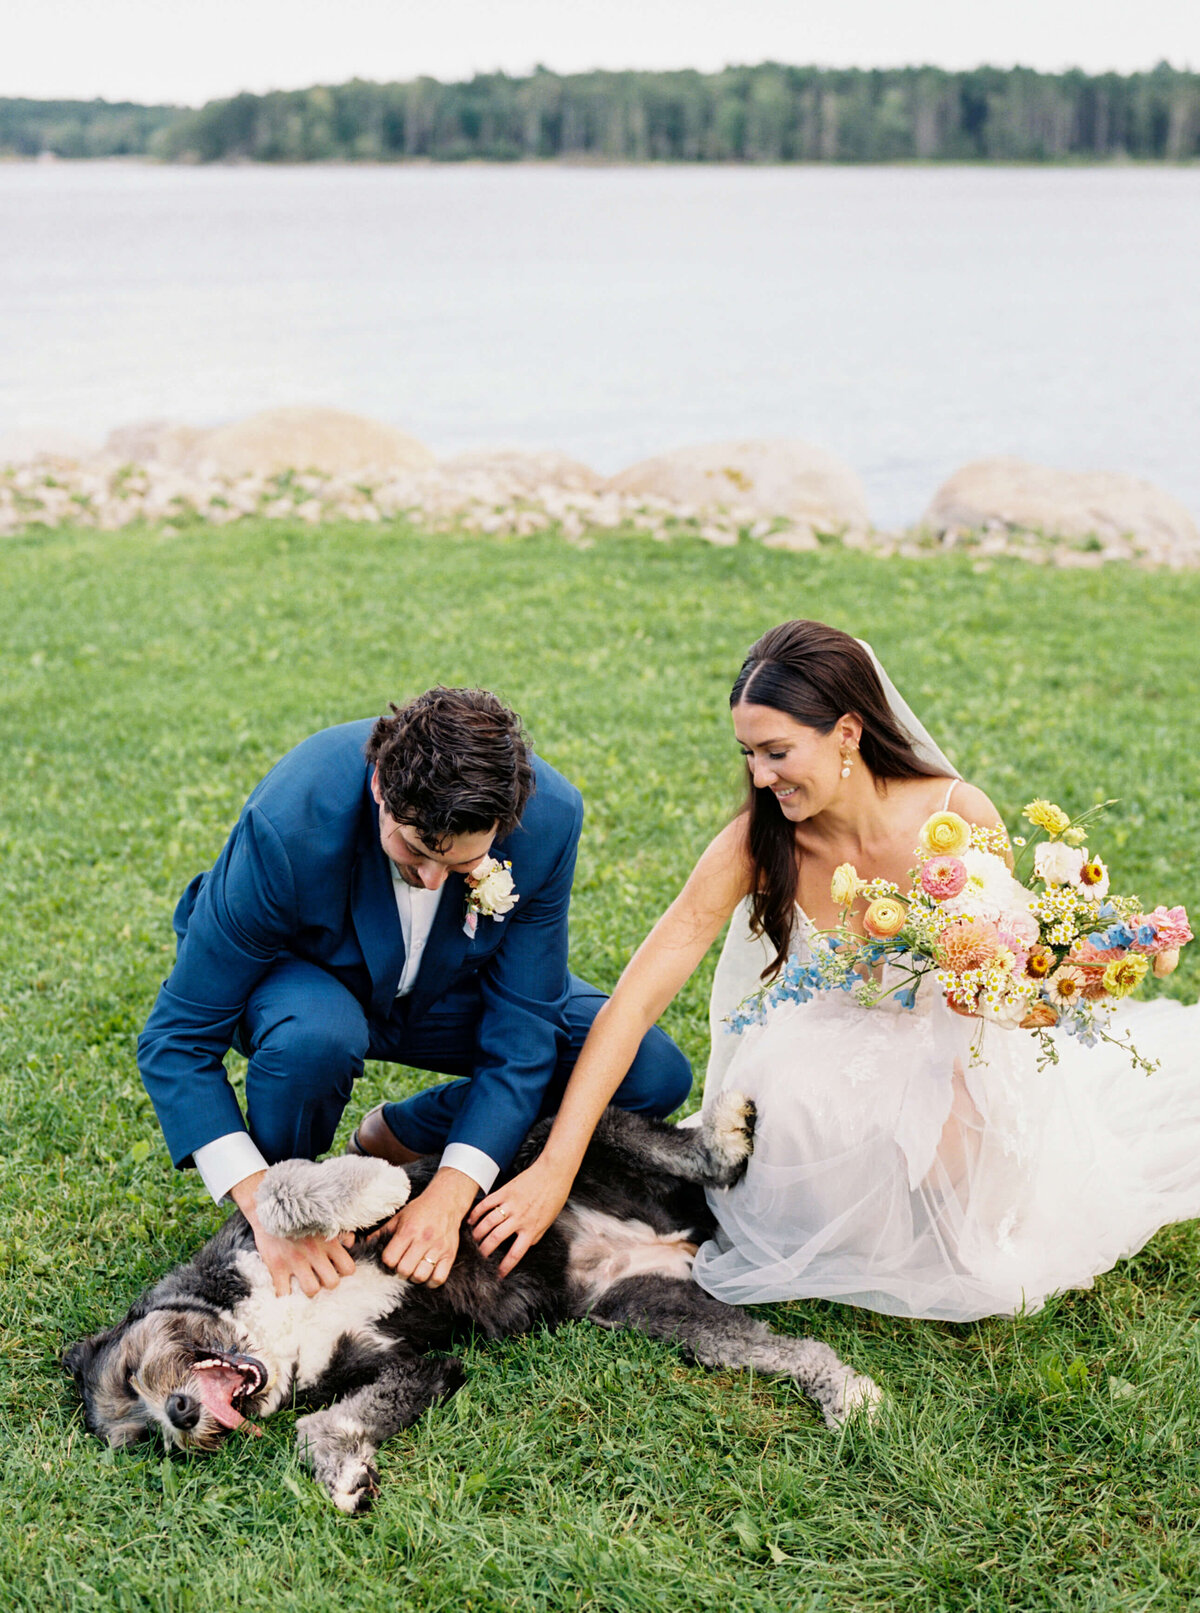 Bride and groom portraits with dog by Halifax wedding photographer,Alyssa Joy Photography